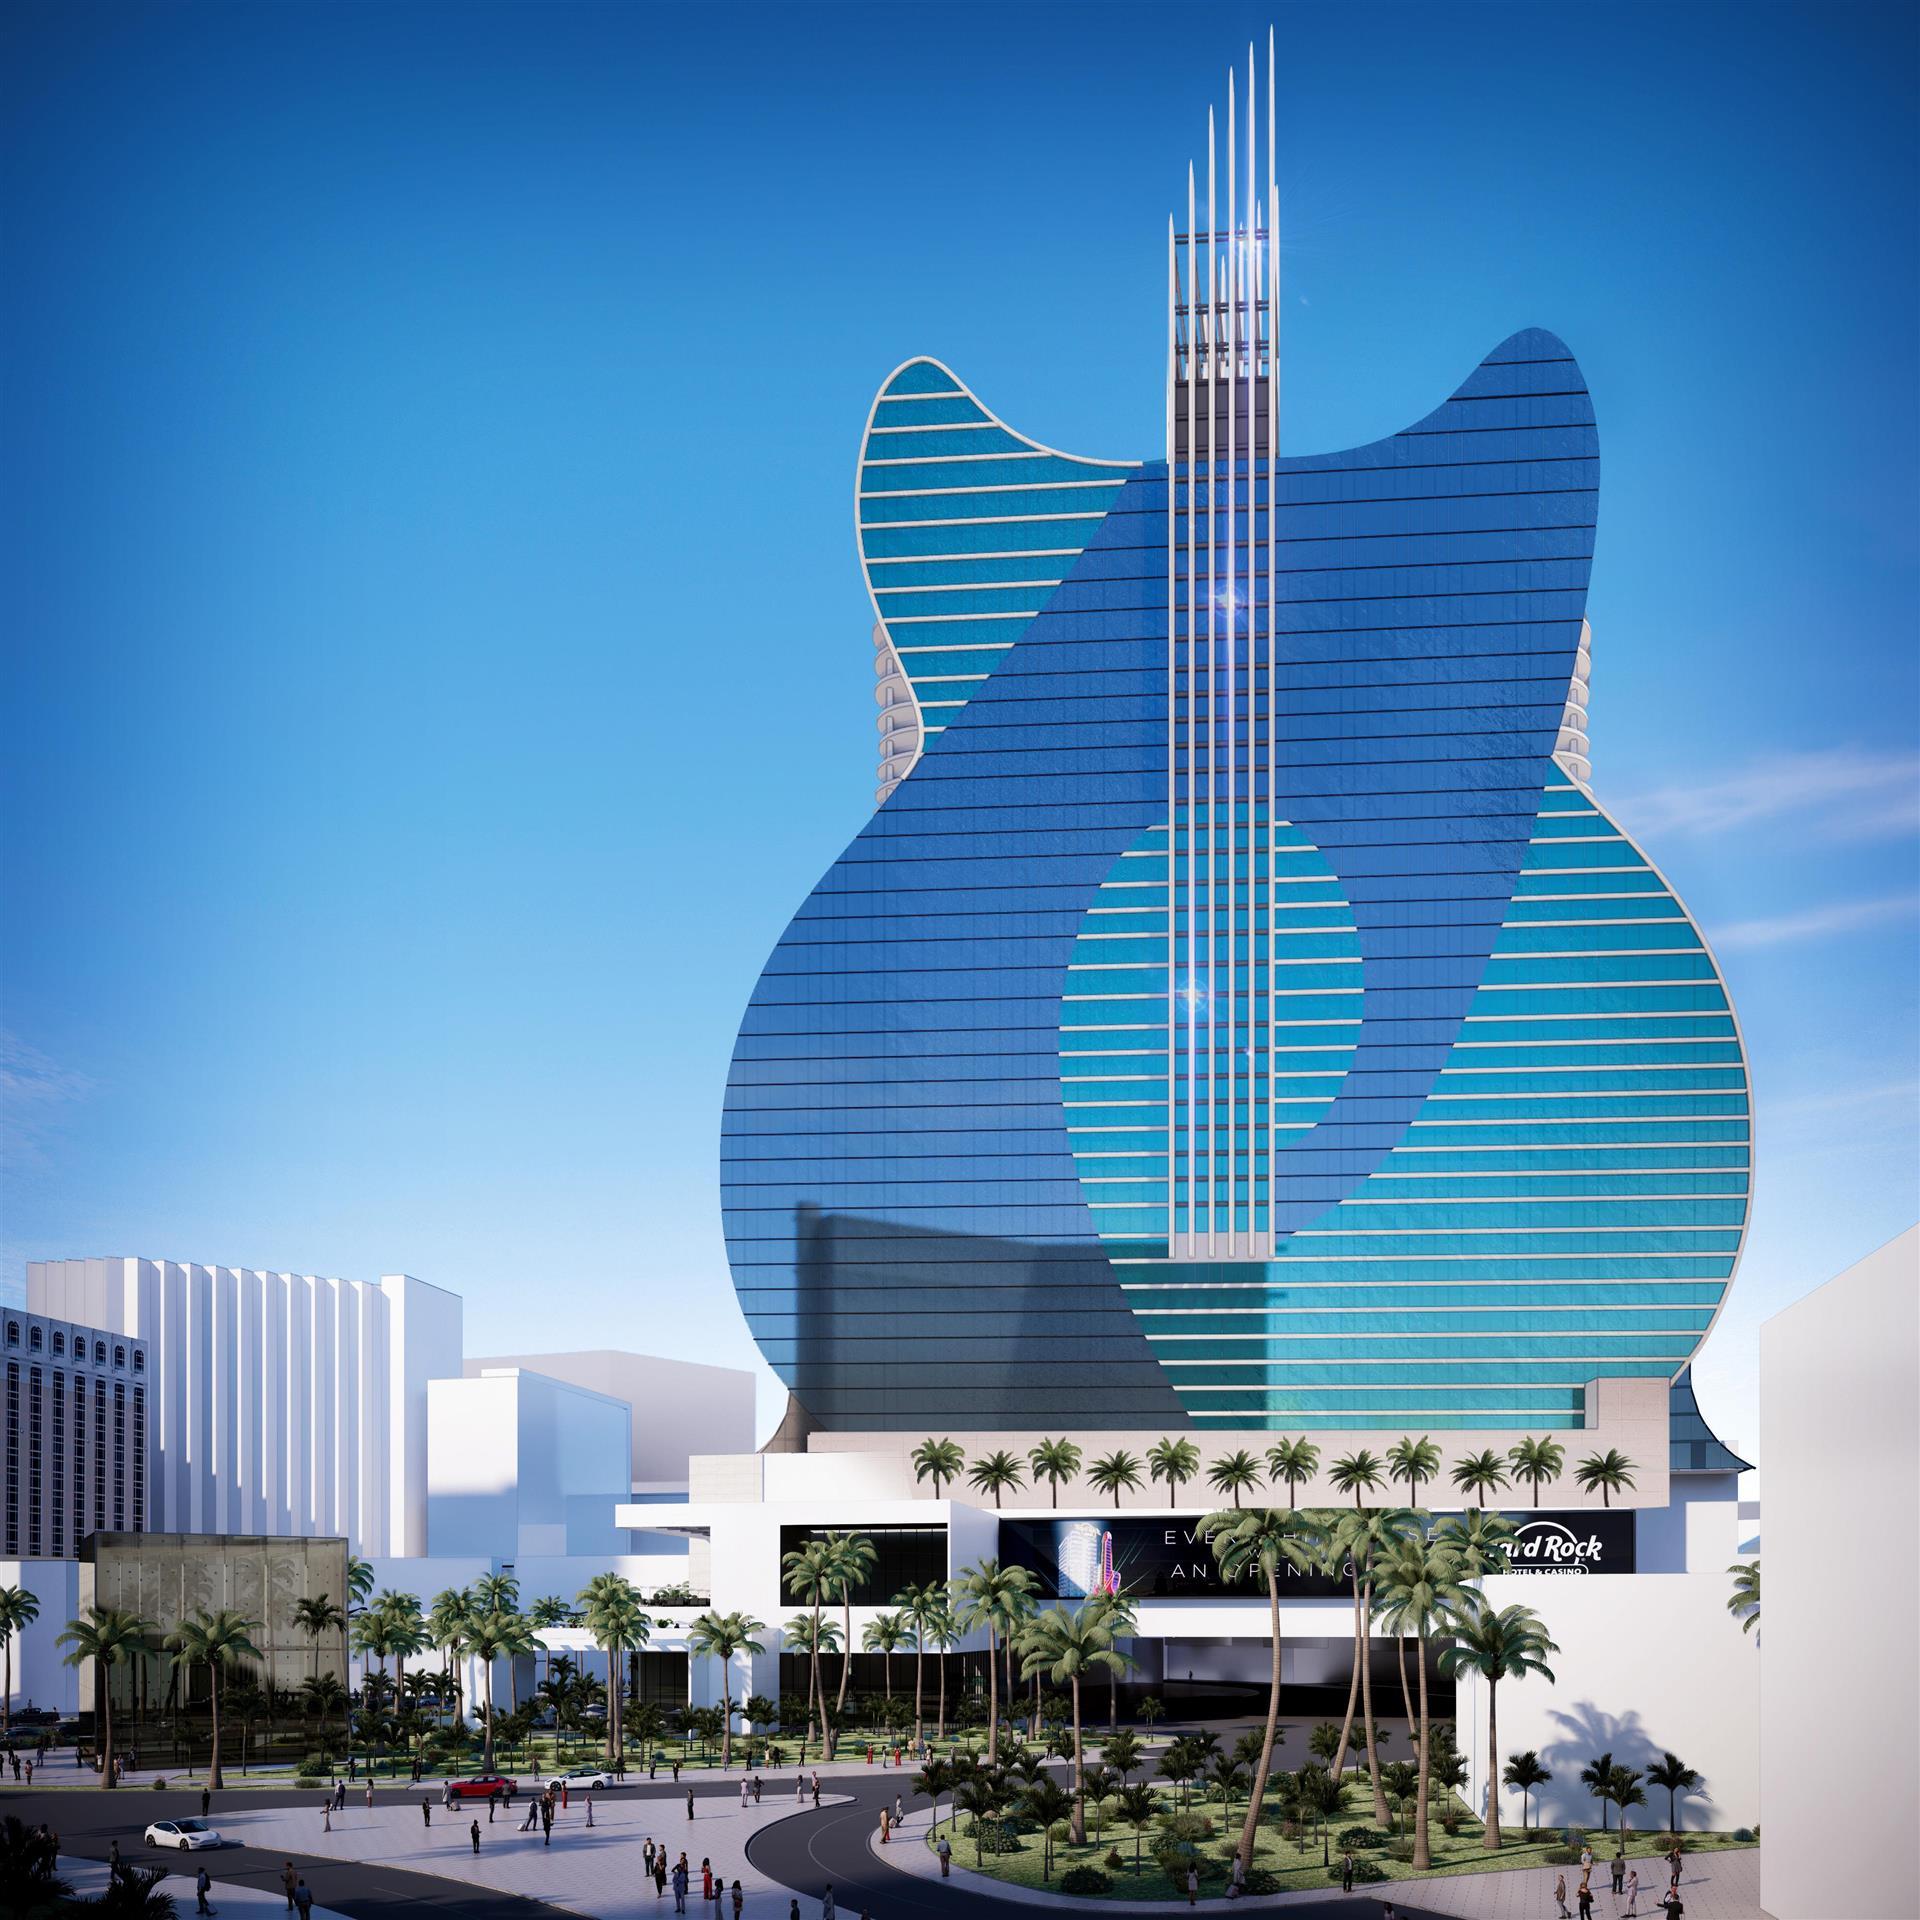 Hard Rock Las Vegas (Formerly The Mirage) in Las Vegas, NV